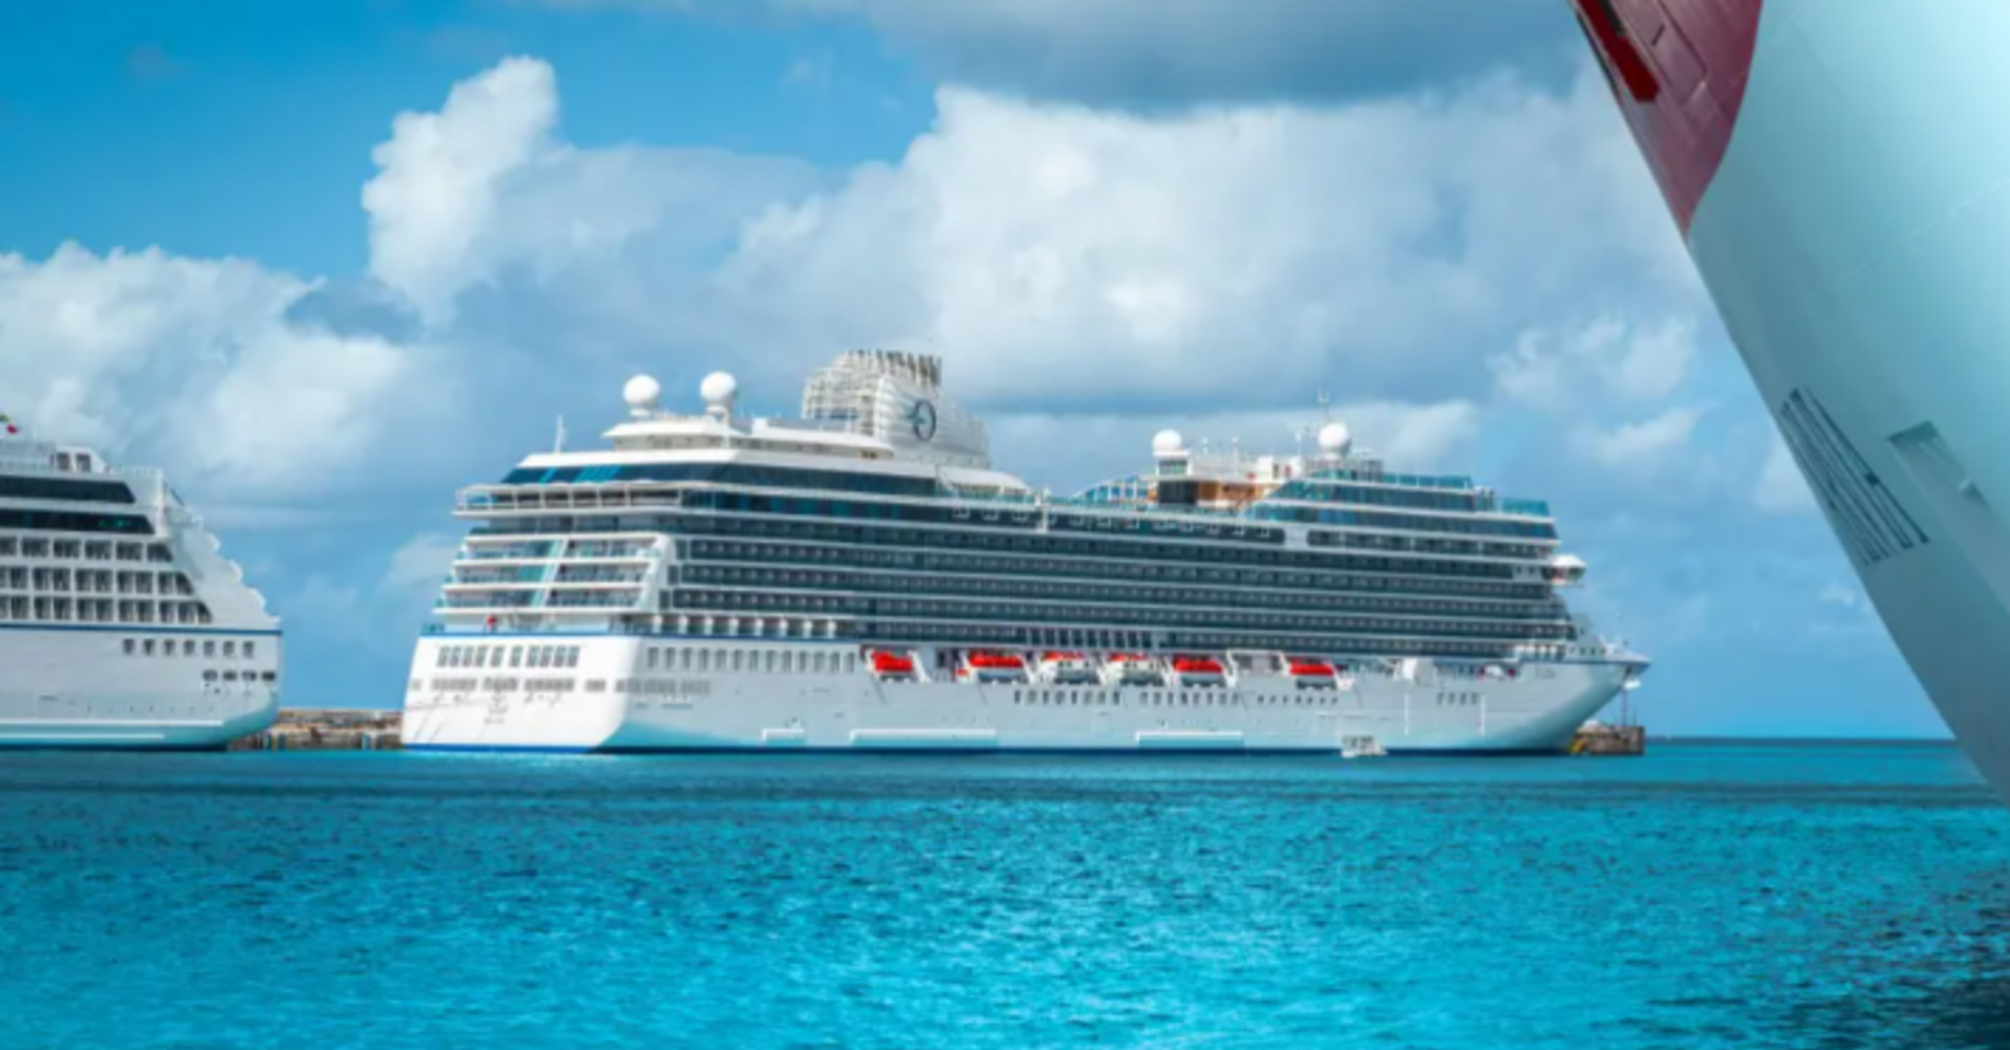 The luxury cruise ship Vista Oceania